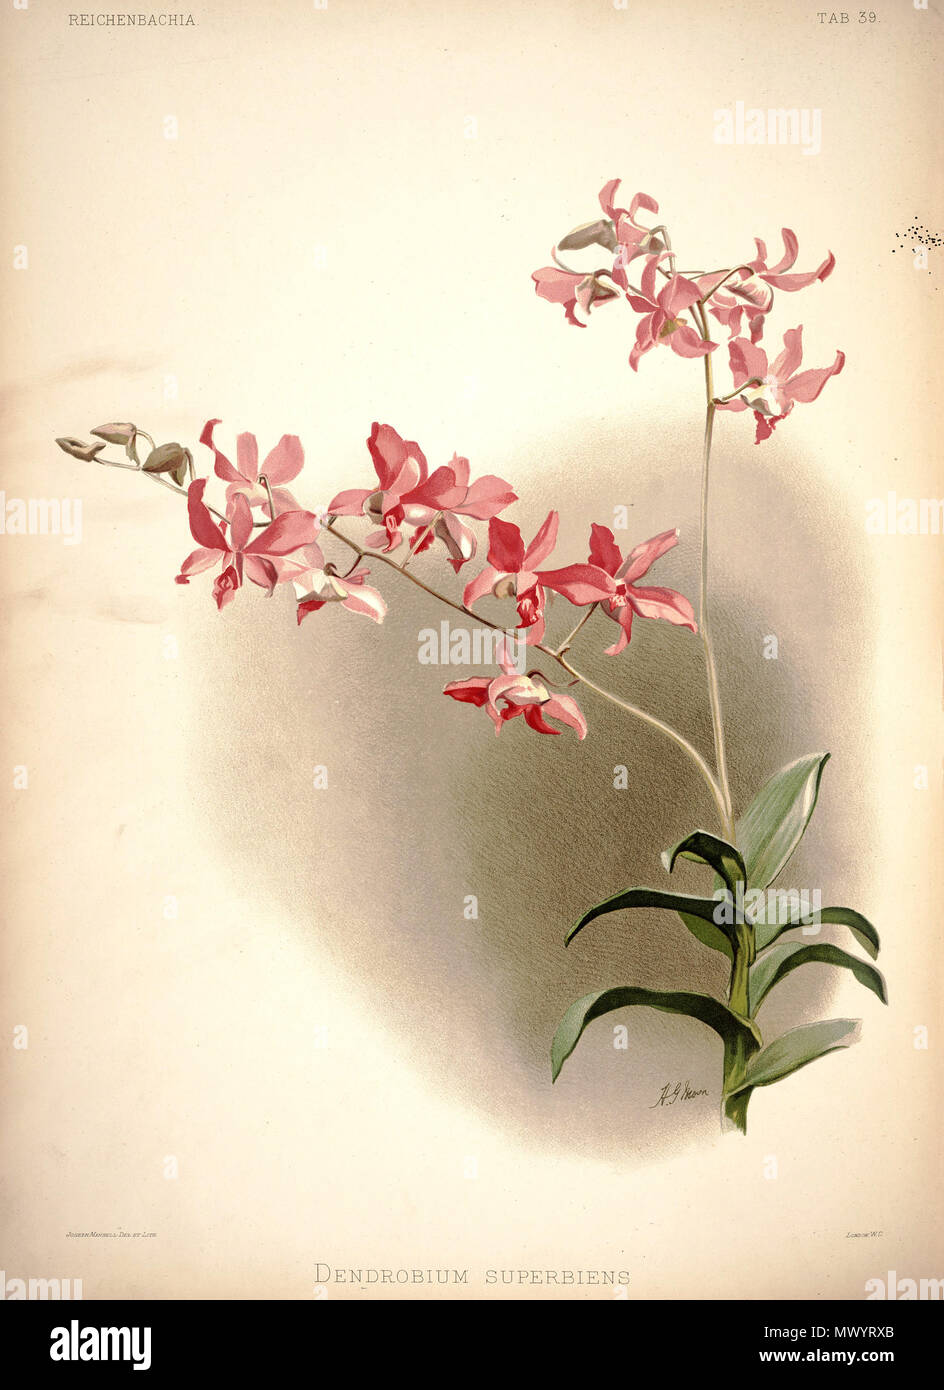 . Dendrobium × superbiens . between 1888 and 1894. H. Sotheran & Co., London (editor) 220 Frederick Sander - Reichenbachia I plate 39 (1888) - Dendrobium superbiens Stock Photo